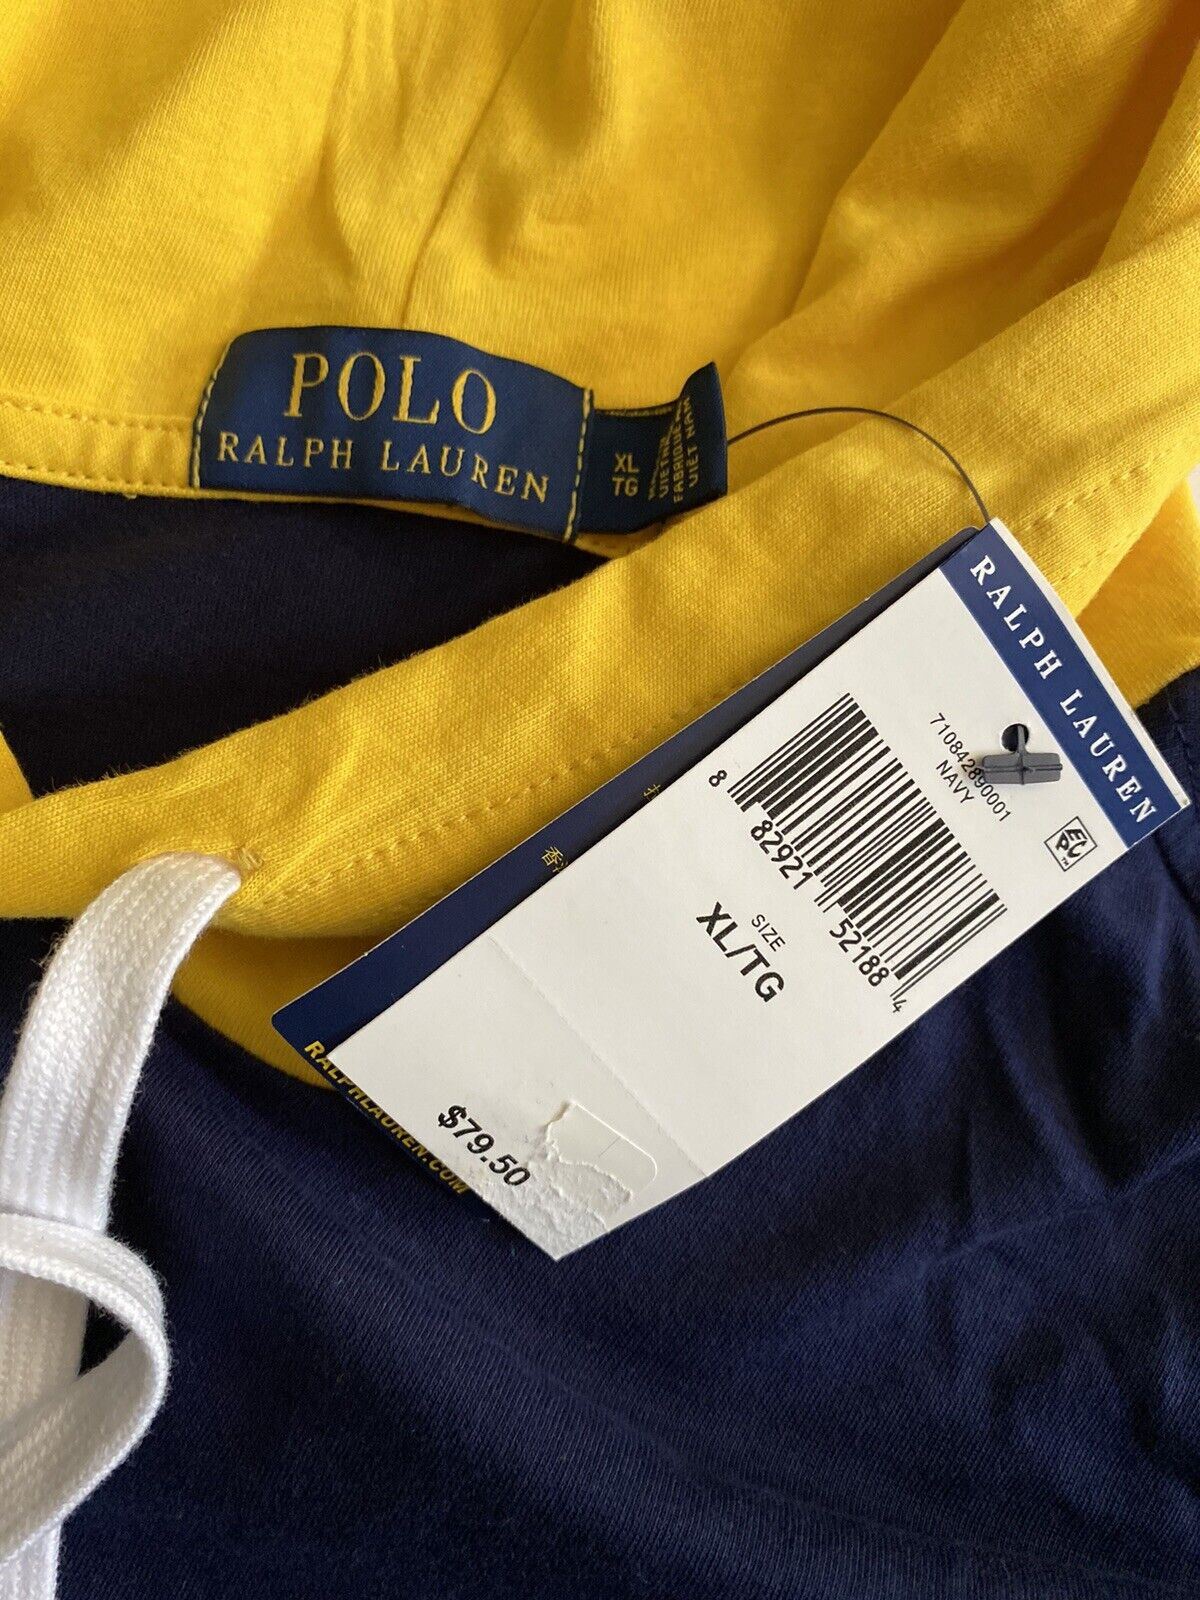 Neu mit Etikett: Polo Ralph Lauren Langarm-Sweatshirt mit Signature-Logo, Marineblau, XL 